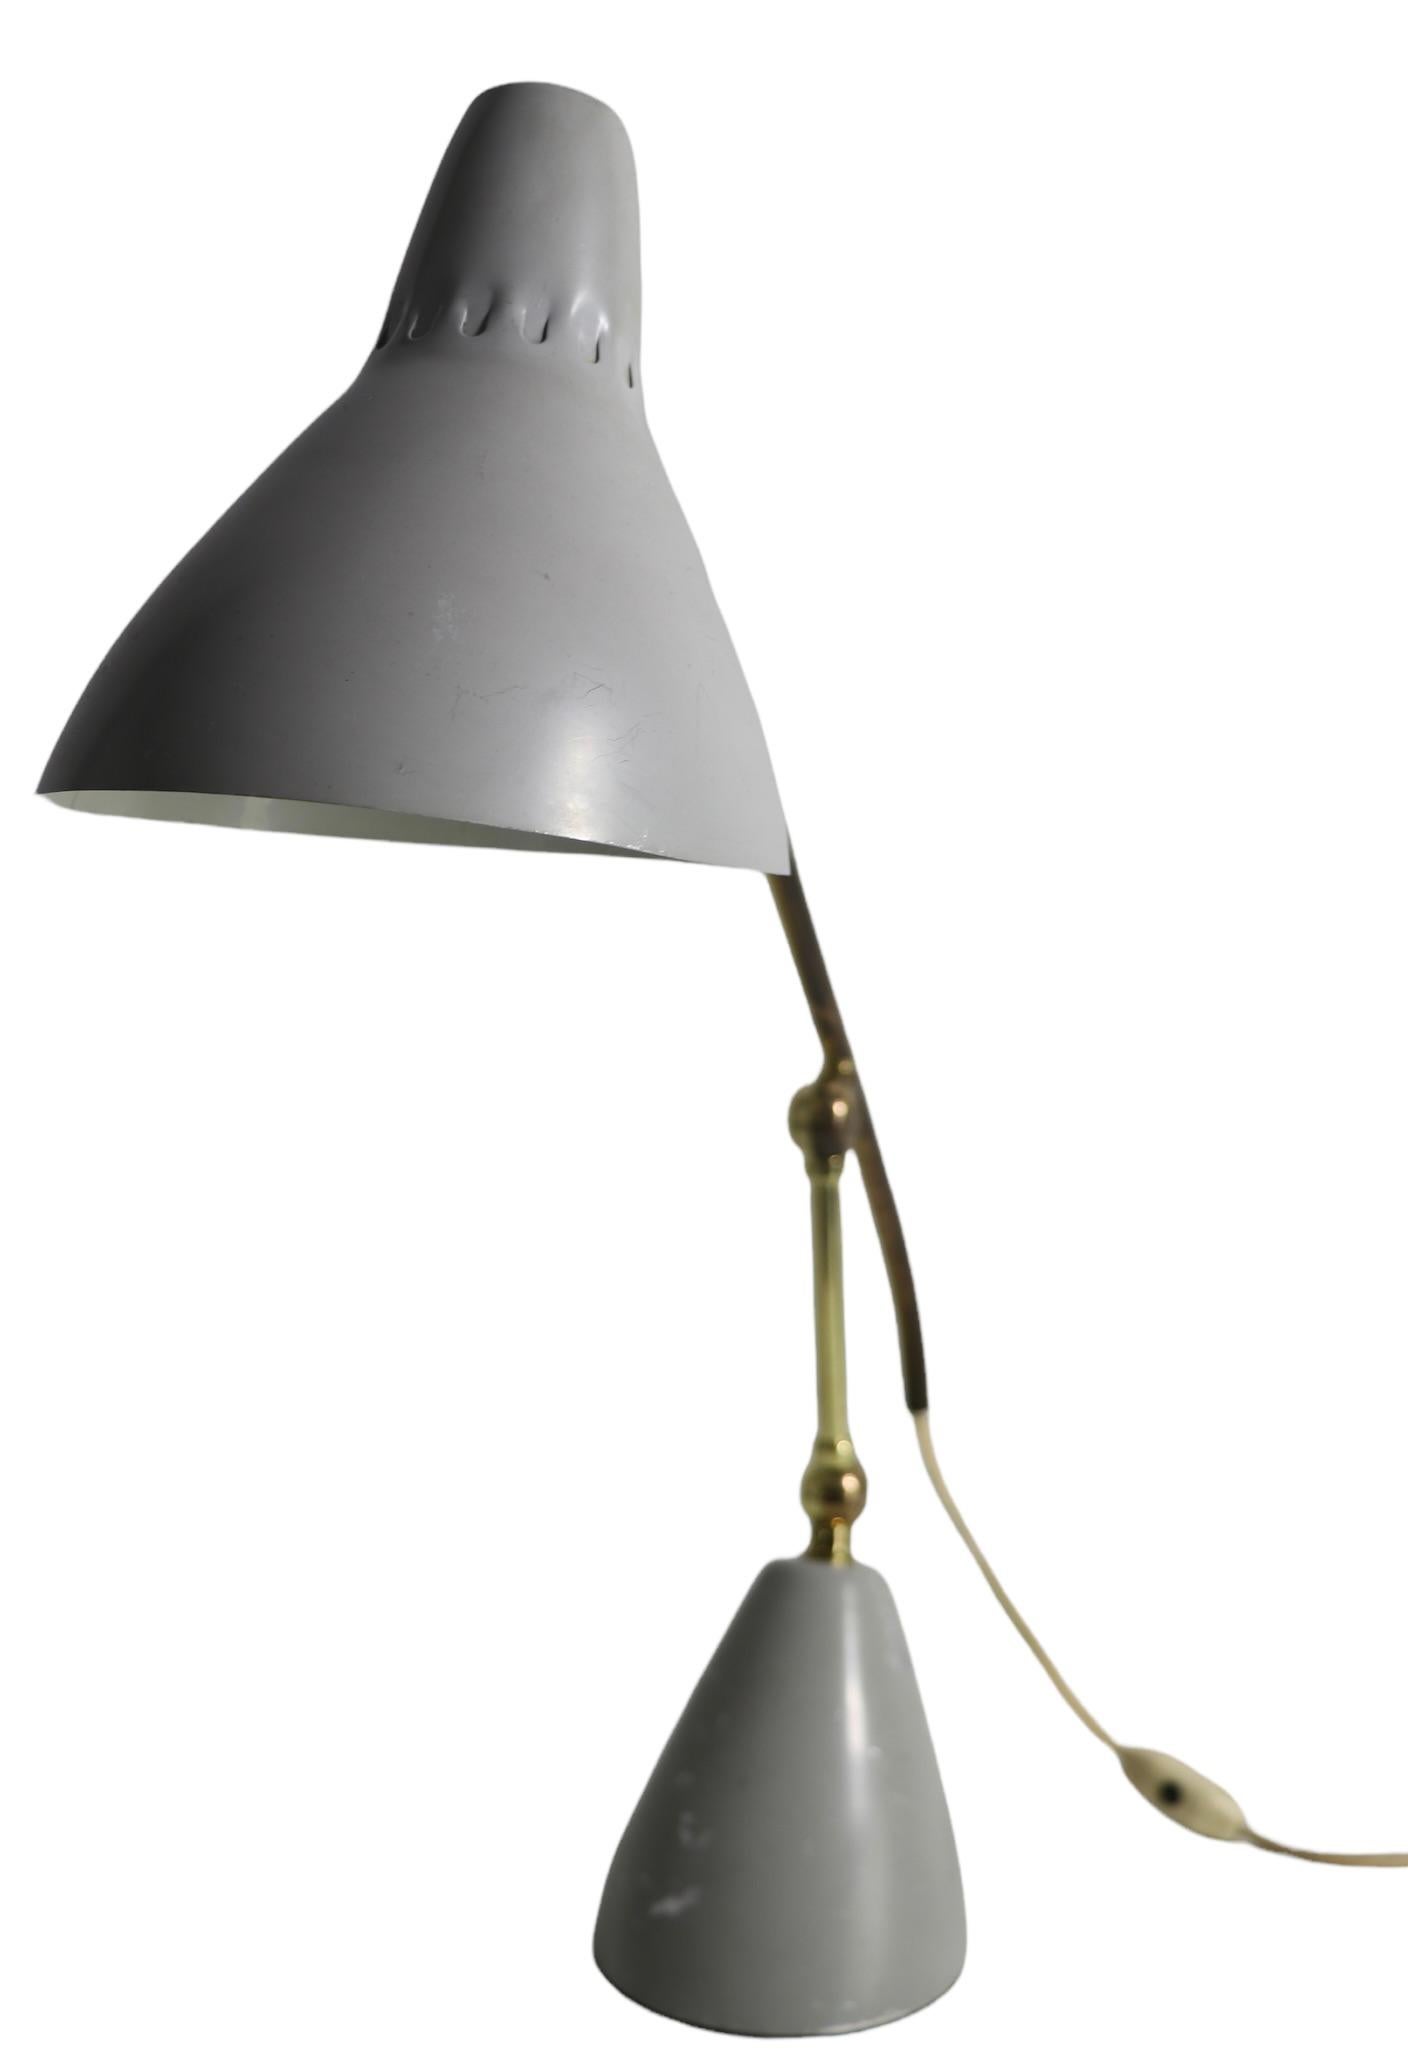 Adjustable Mid Century Desk Lamp Possibly German or Italian in Origin 4